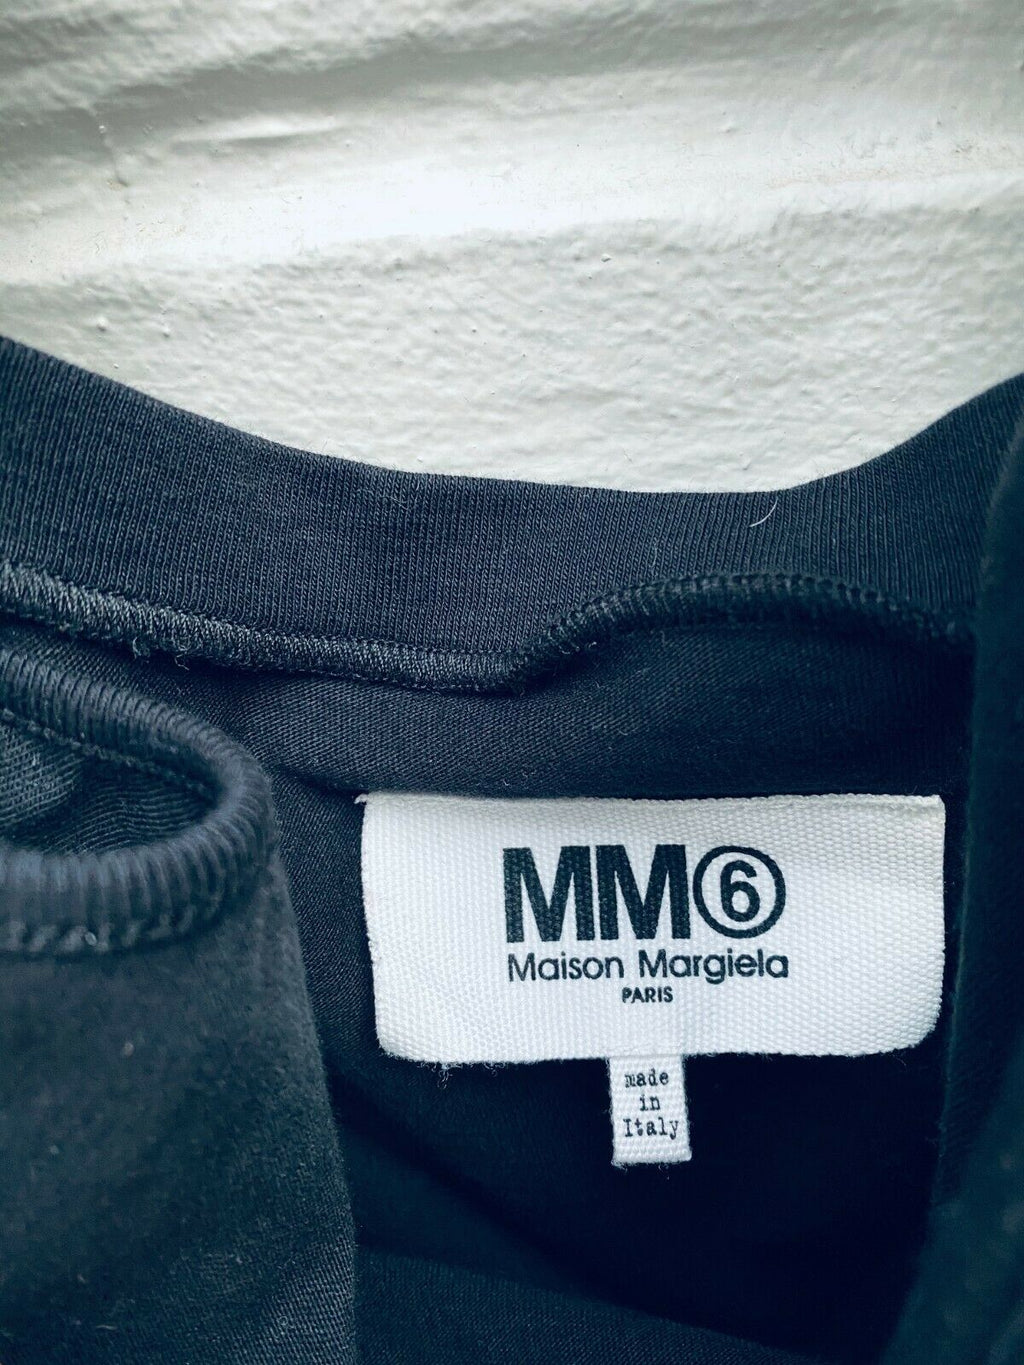 Martin Margiela MM6 Black Tank Top Size S